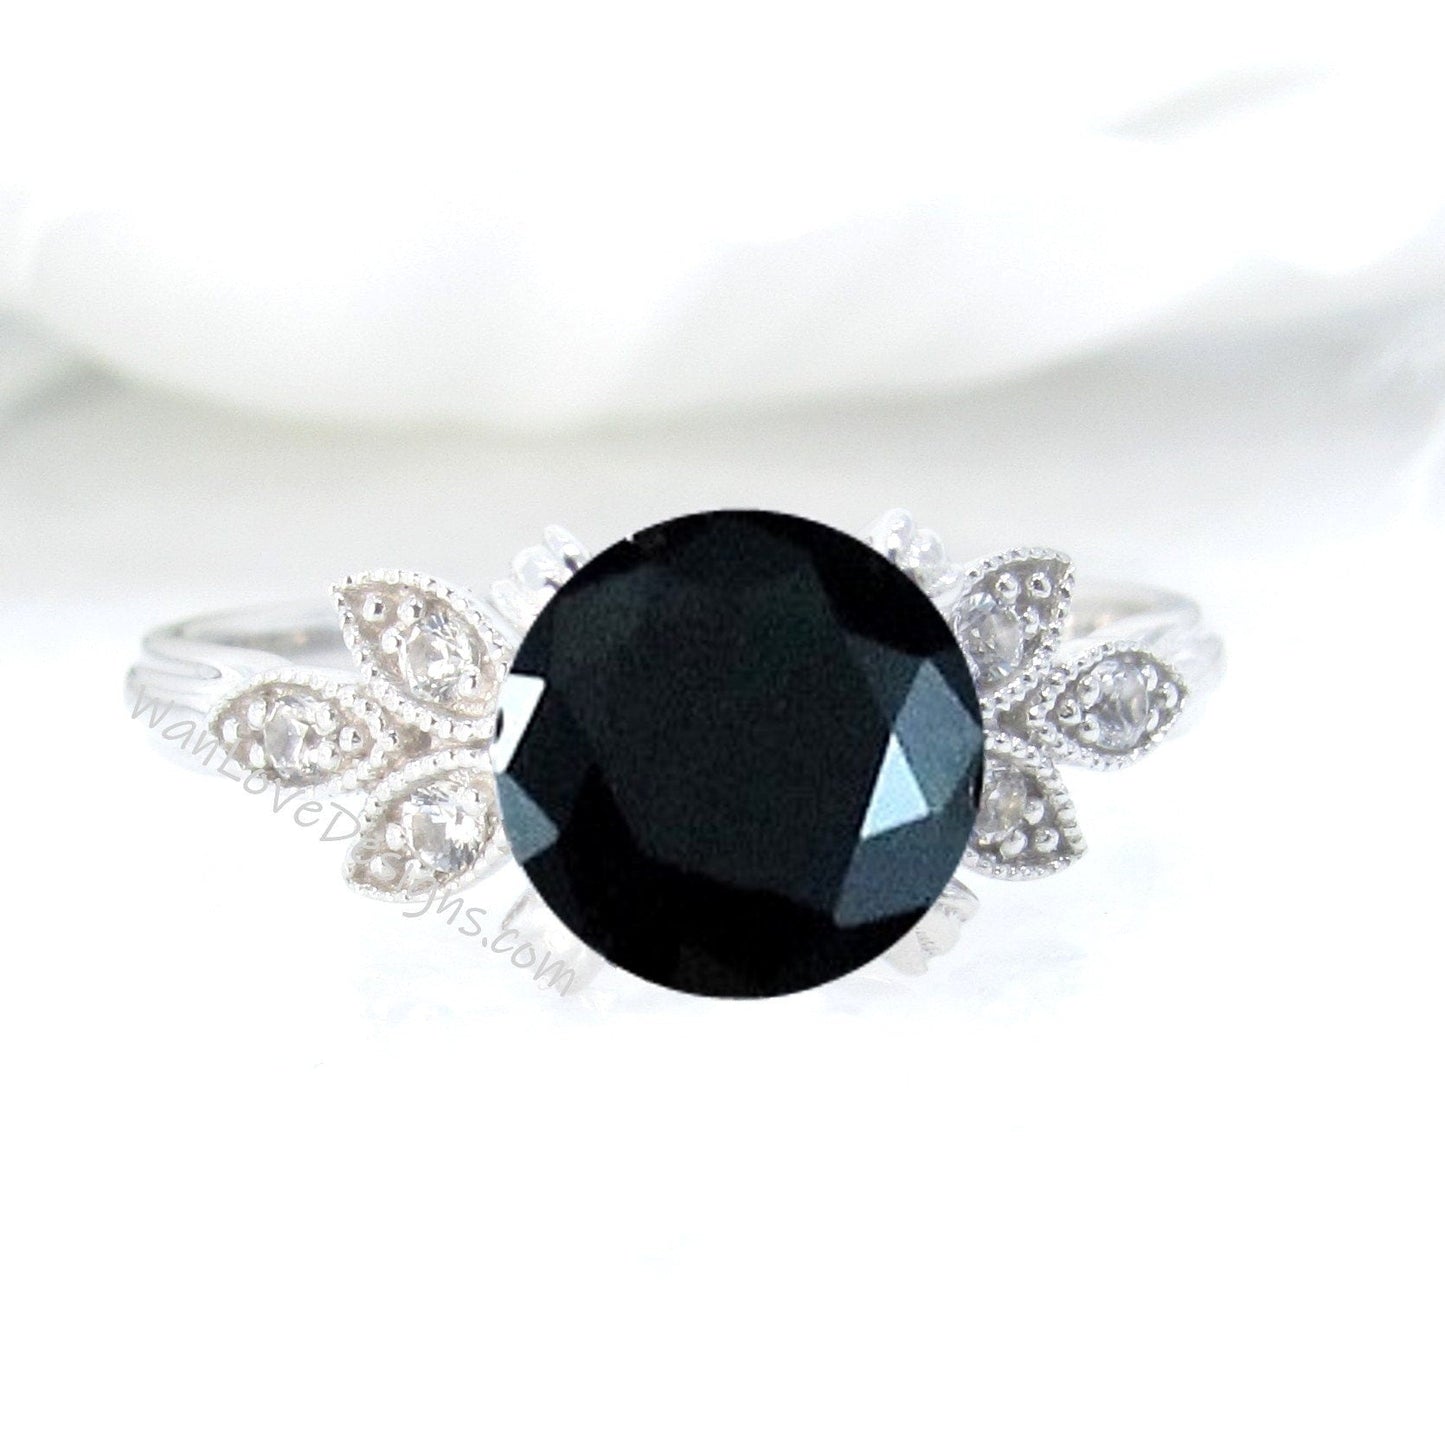 Black Spinel Diamond Milgrain Leaf Engagement Ring, Antique Vintage Nature style Round,Custom Wedding,14kt 18kt Gold,Platinum,WanLoveDesigns Wan Love Designs